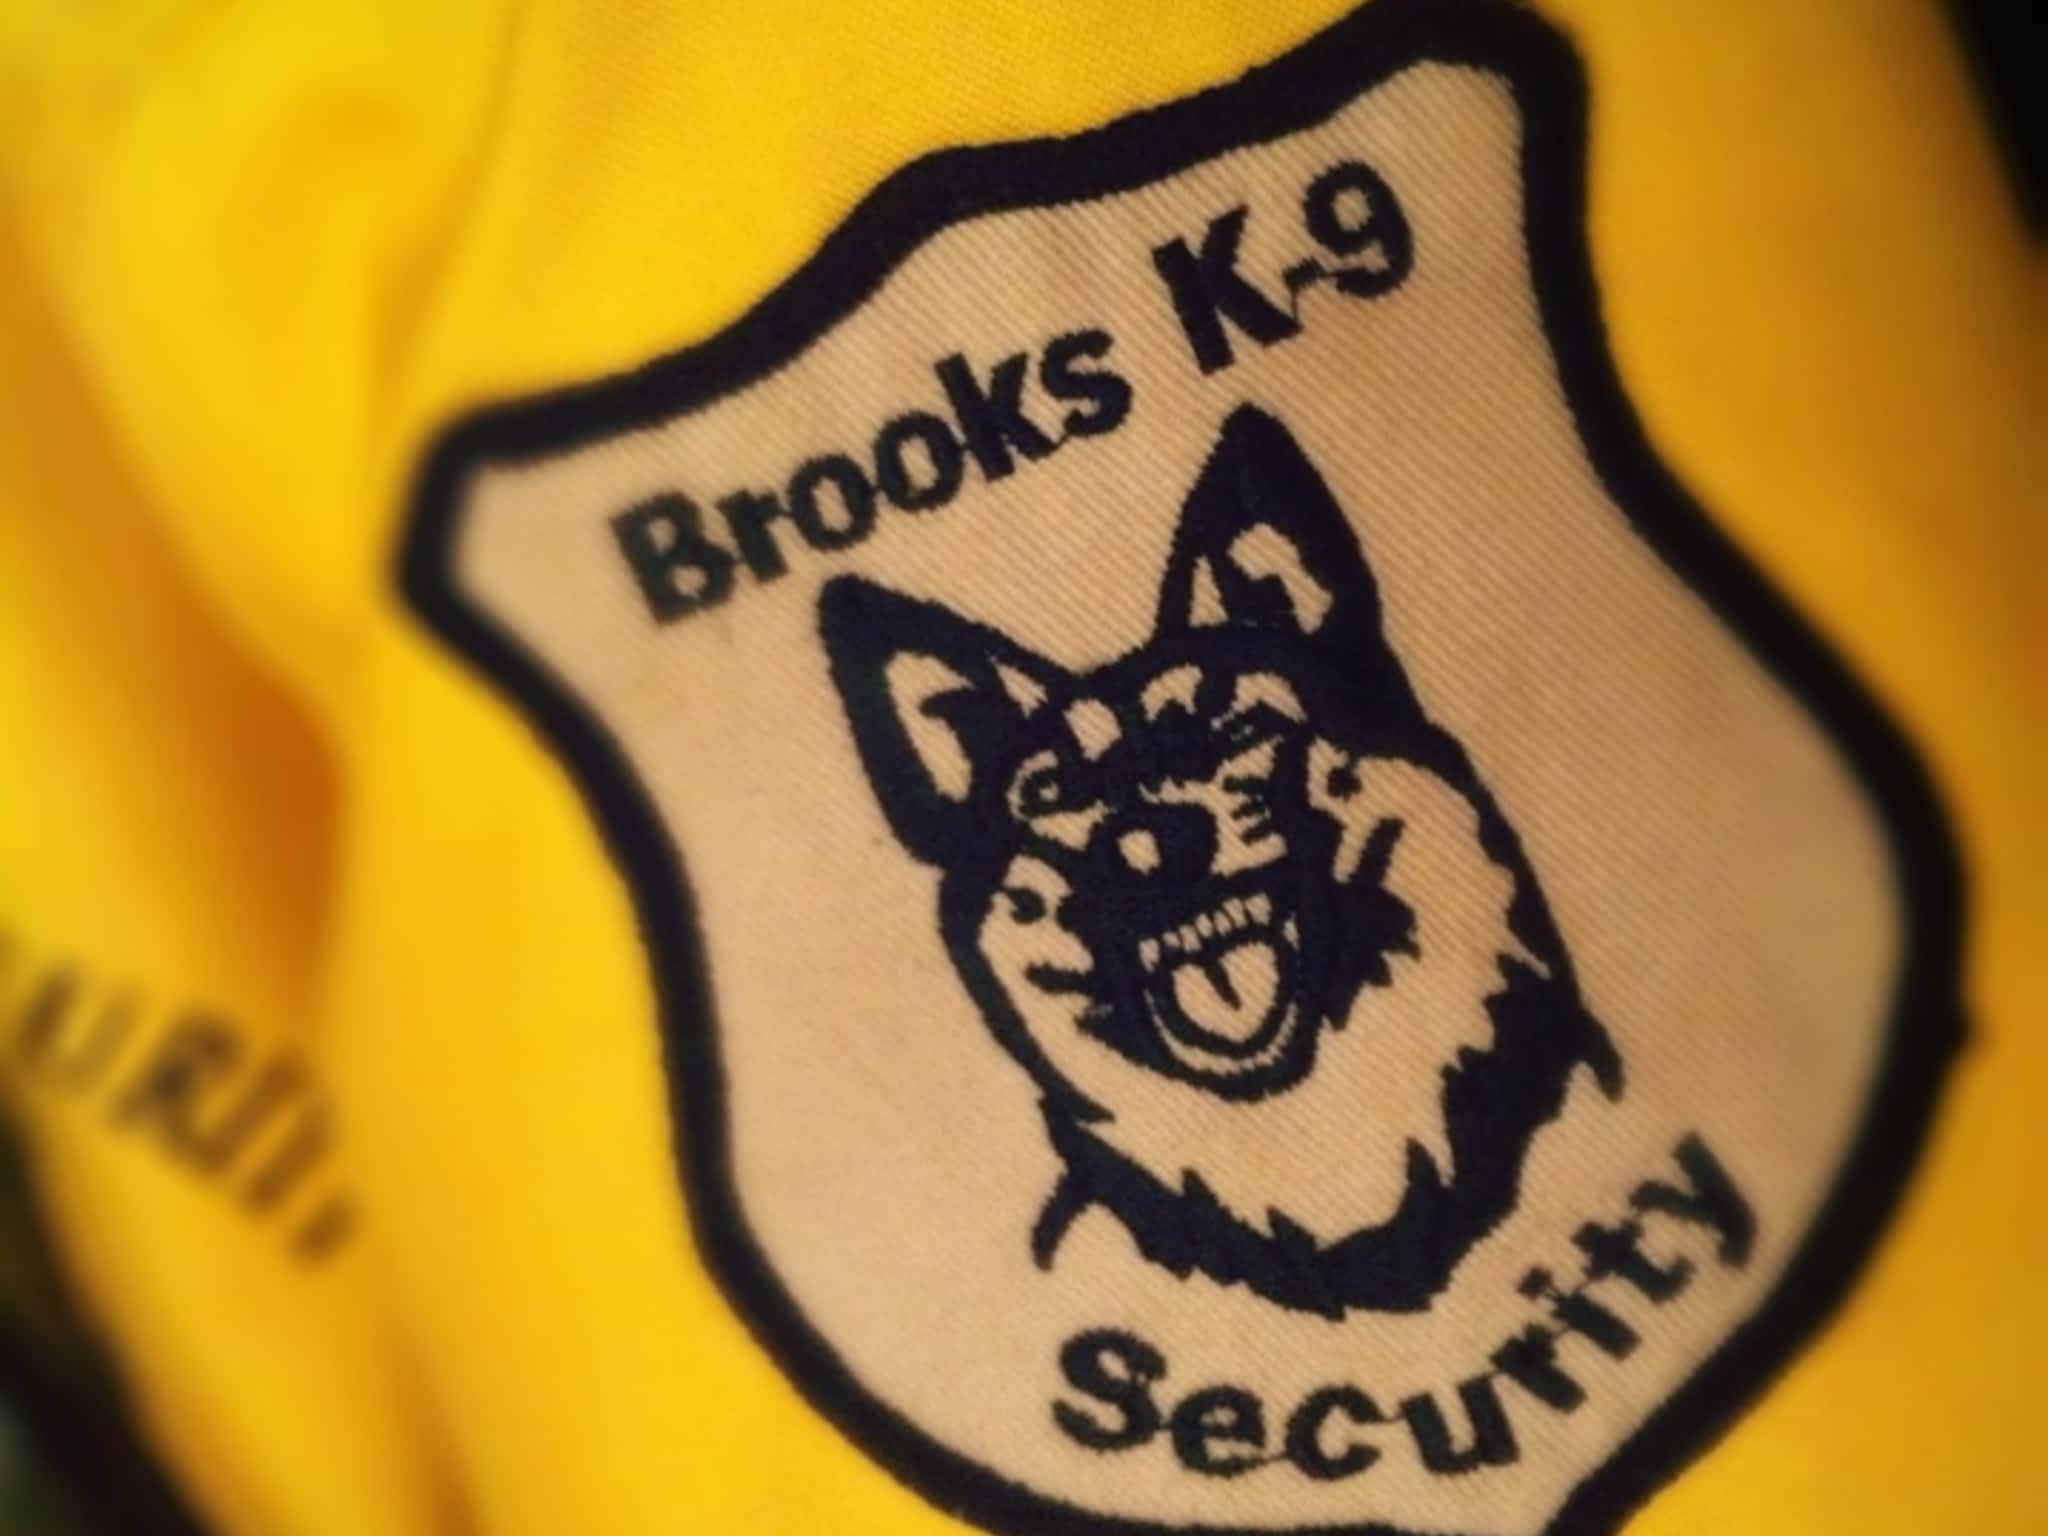 photo Brooks K-9 Security Ltd